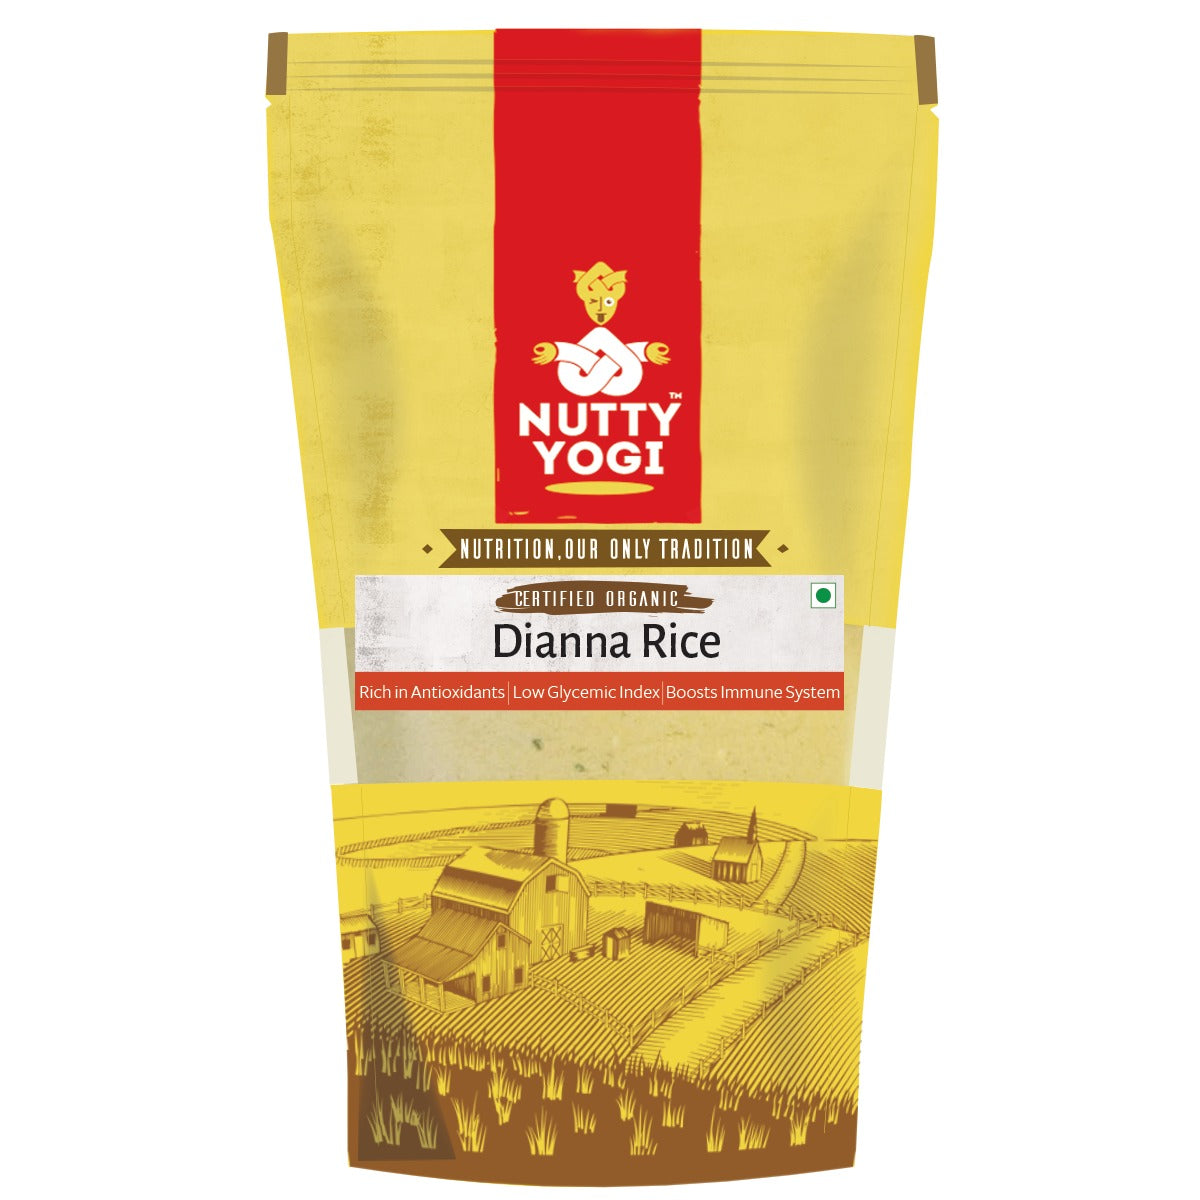 Nutty Yogi Organic Dianna Rice